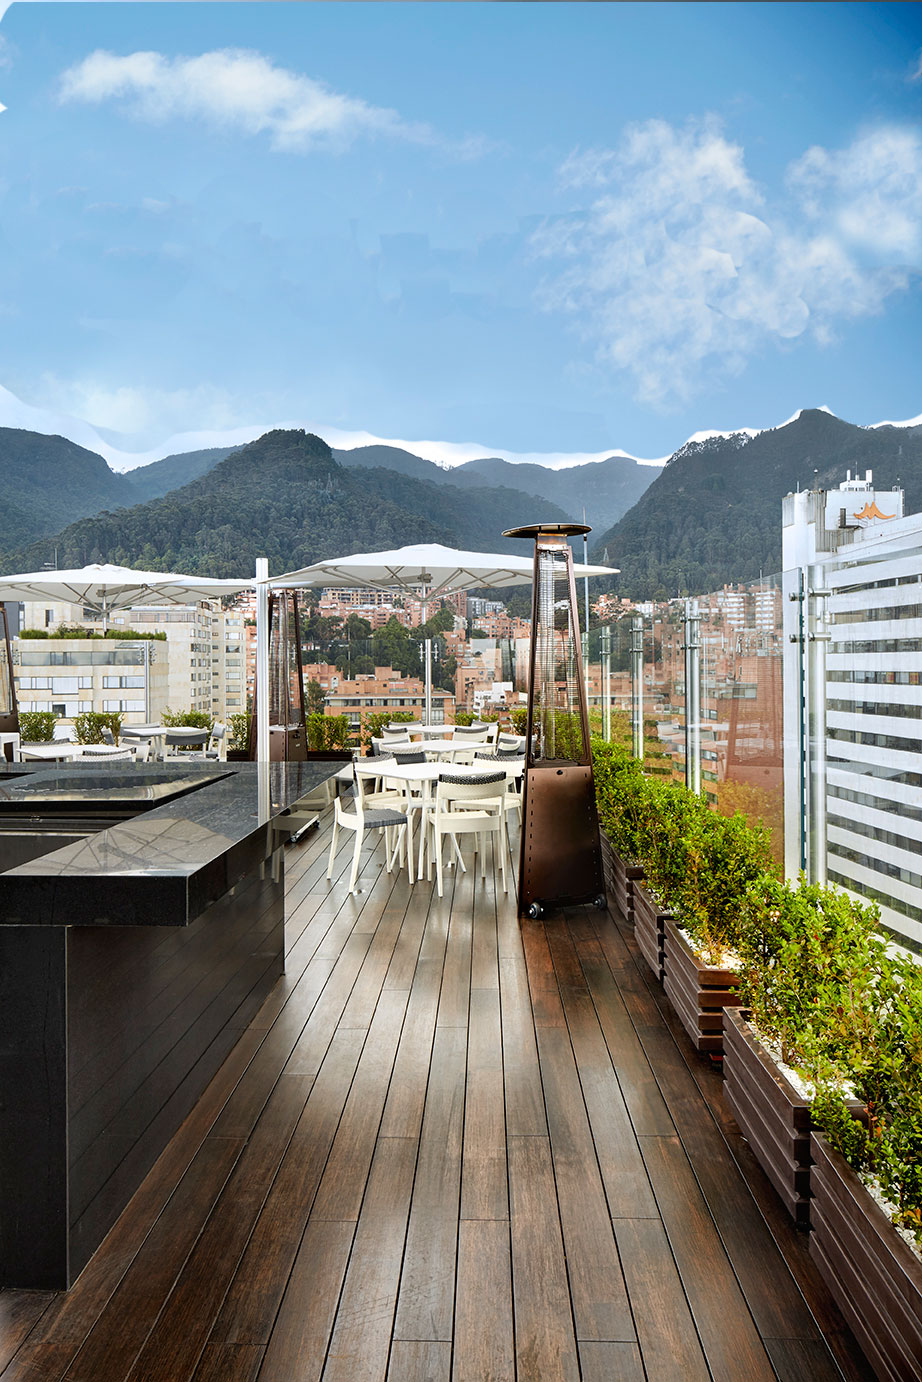 Hotel Hilton Bogotá enews imagenes imagen 6960